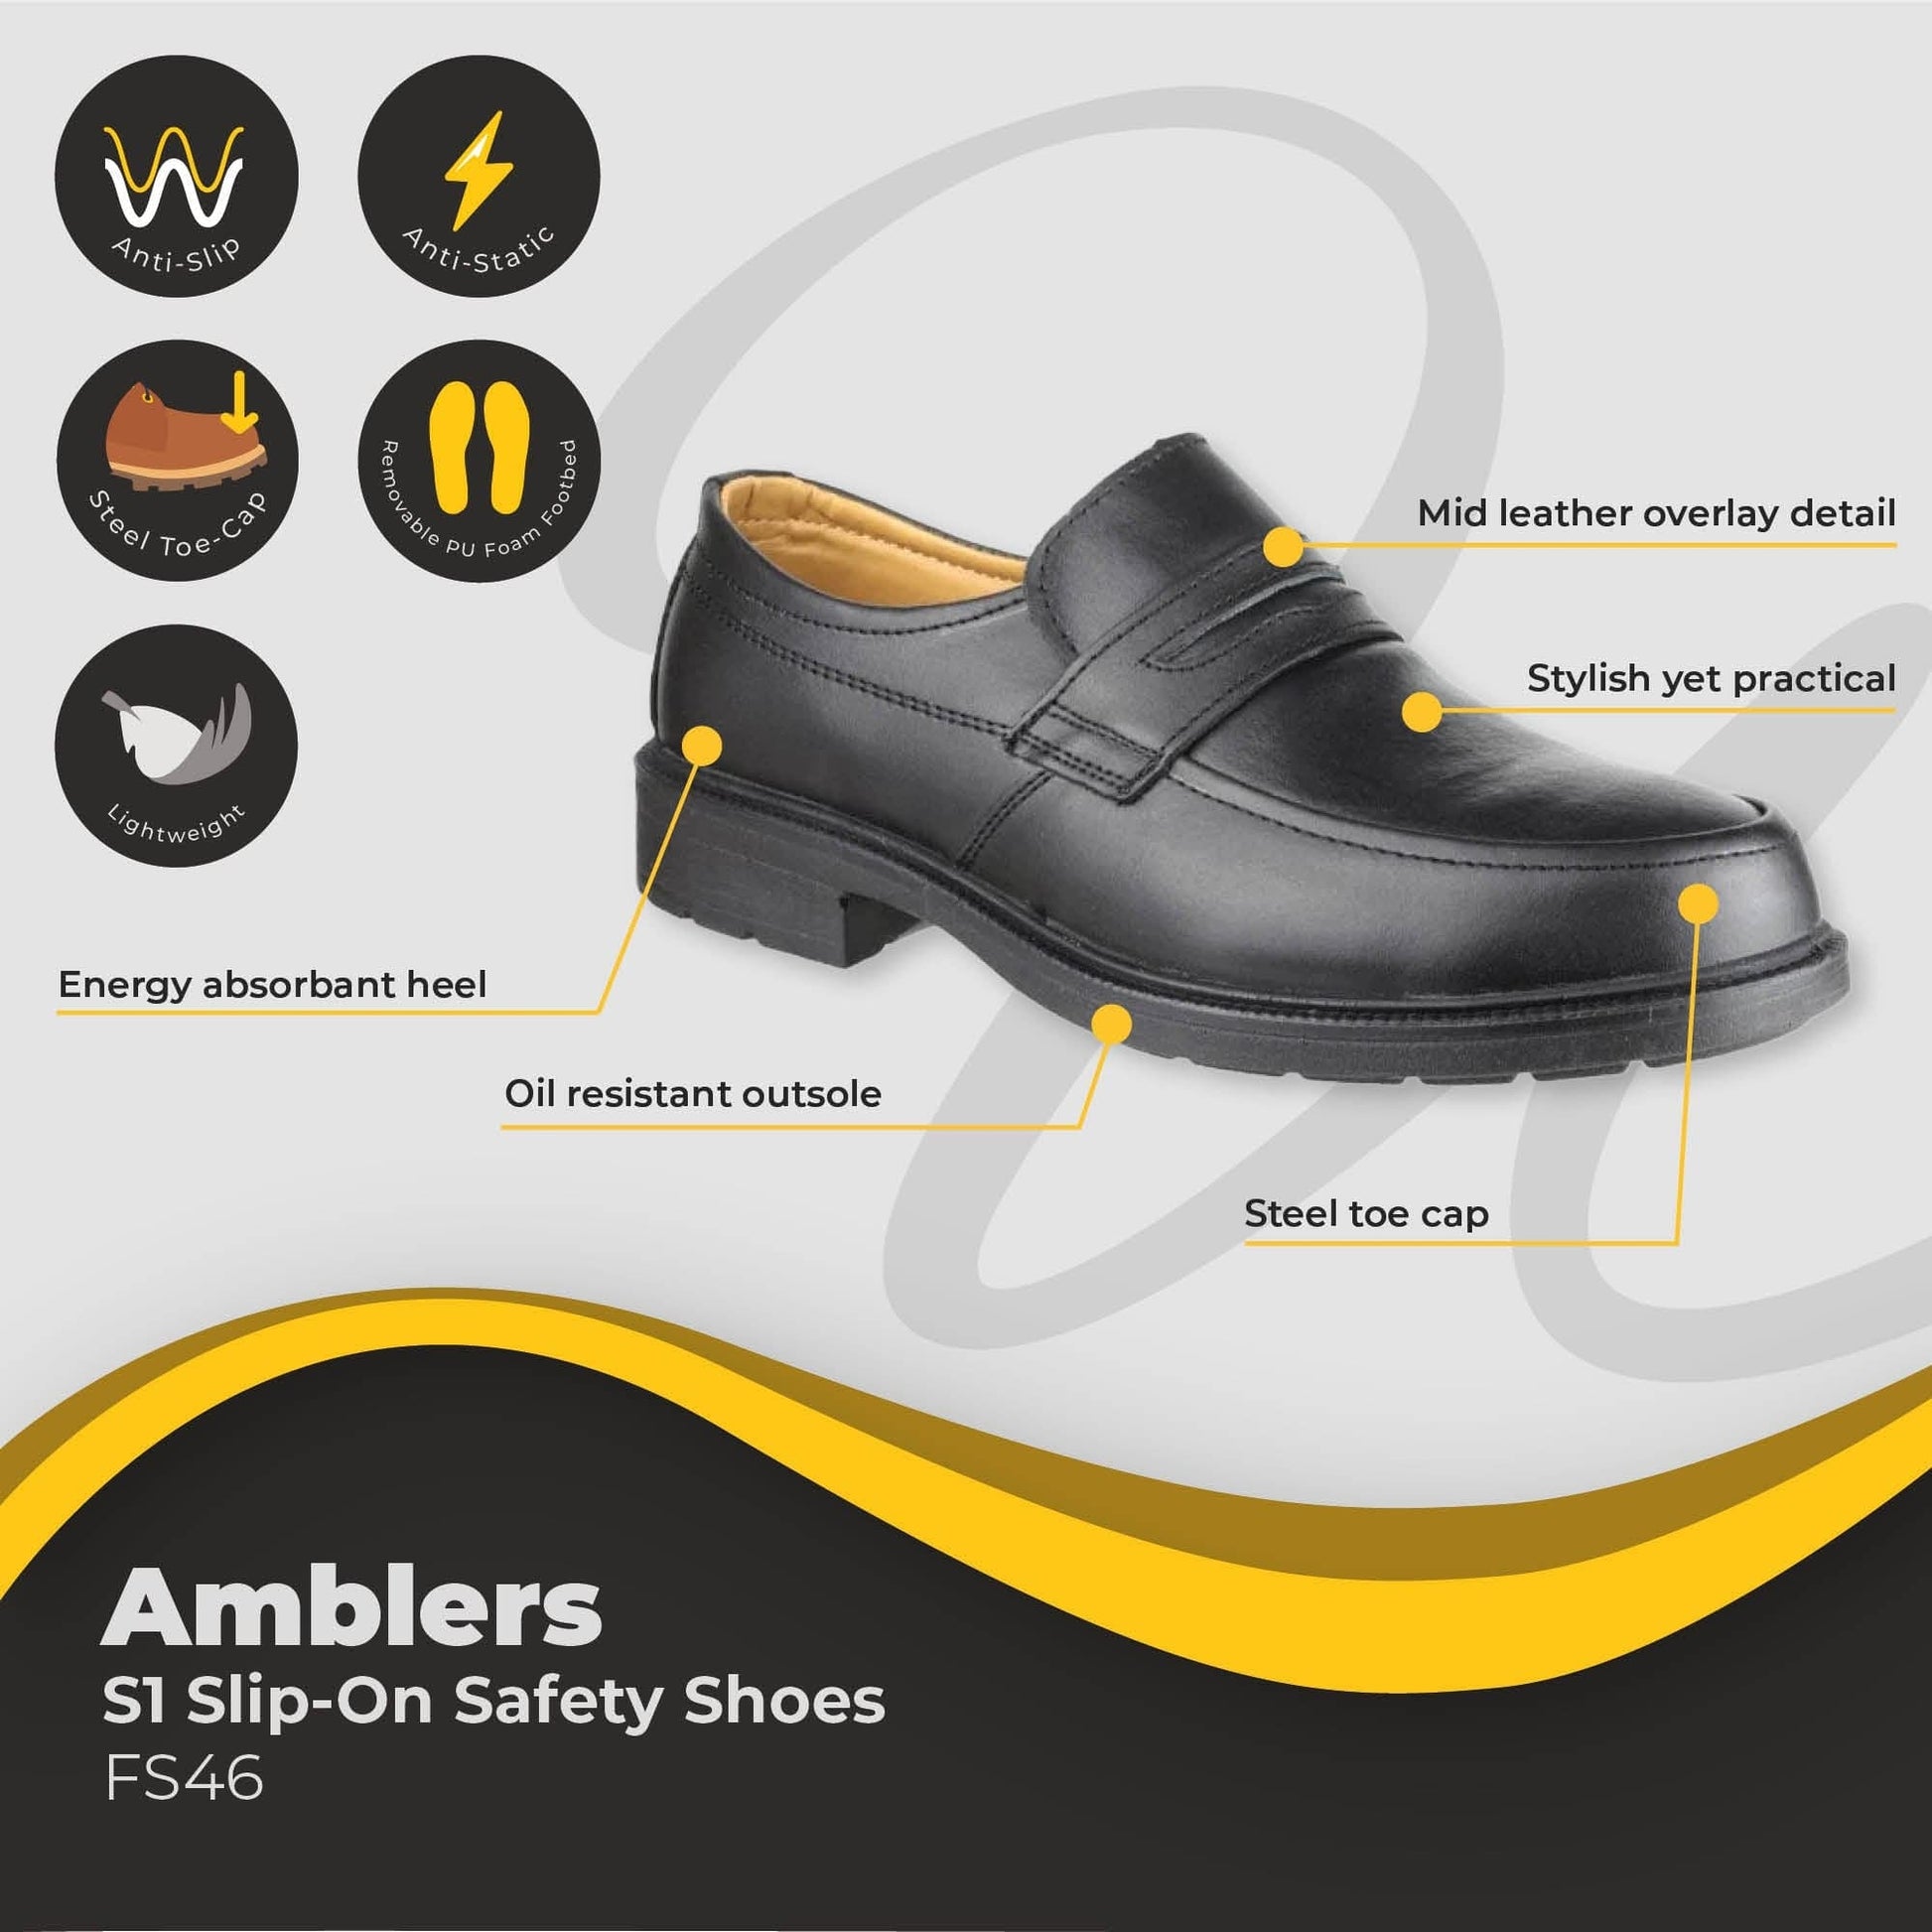 amblers slip on safety shoes s1 fs46 dd377 06